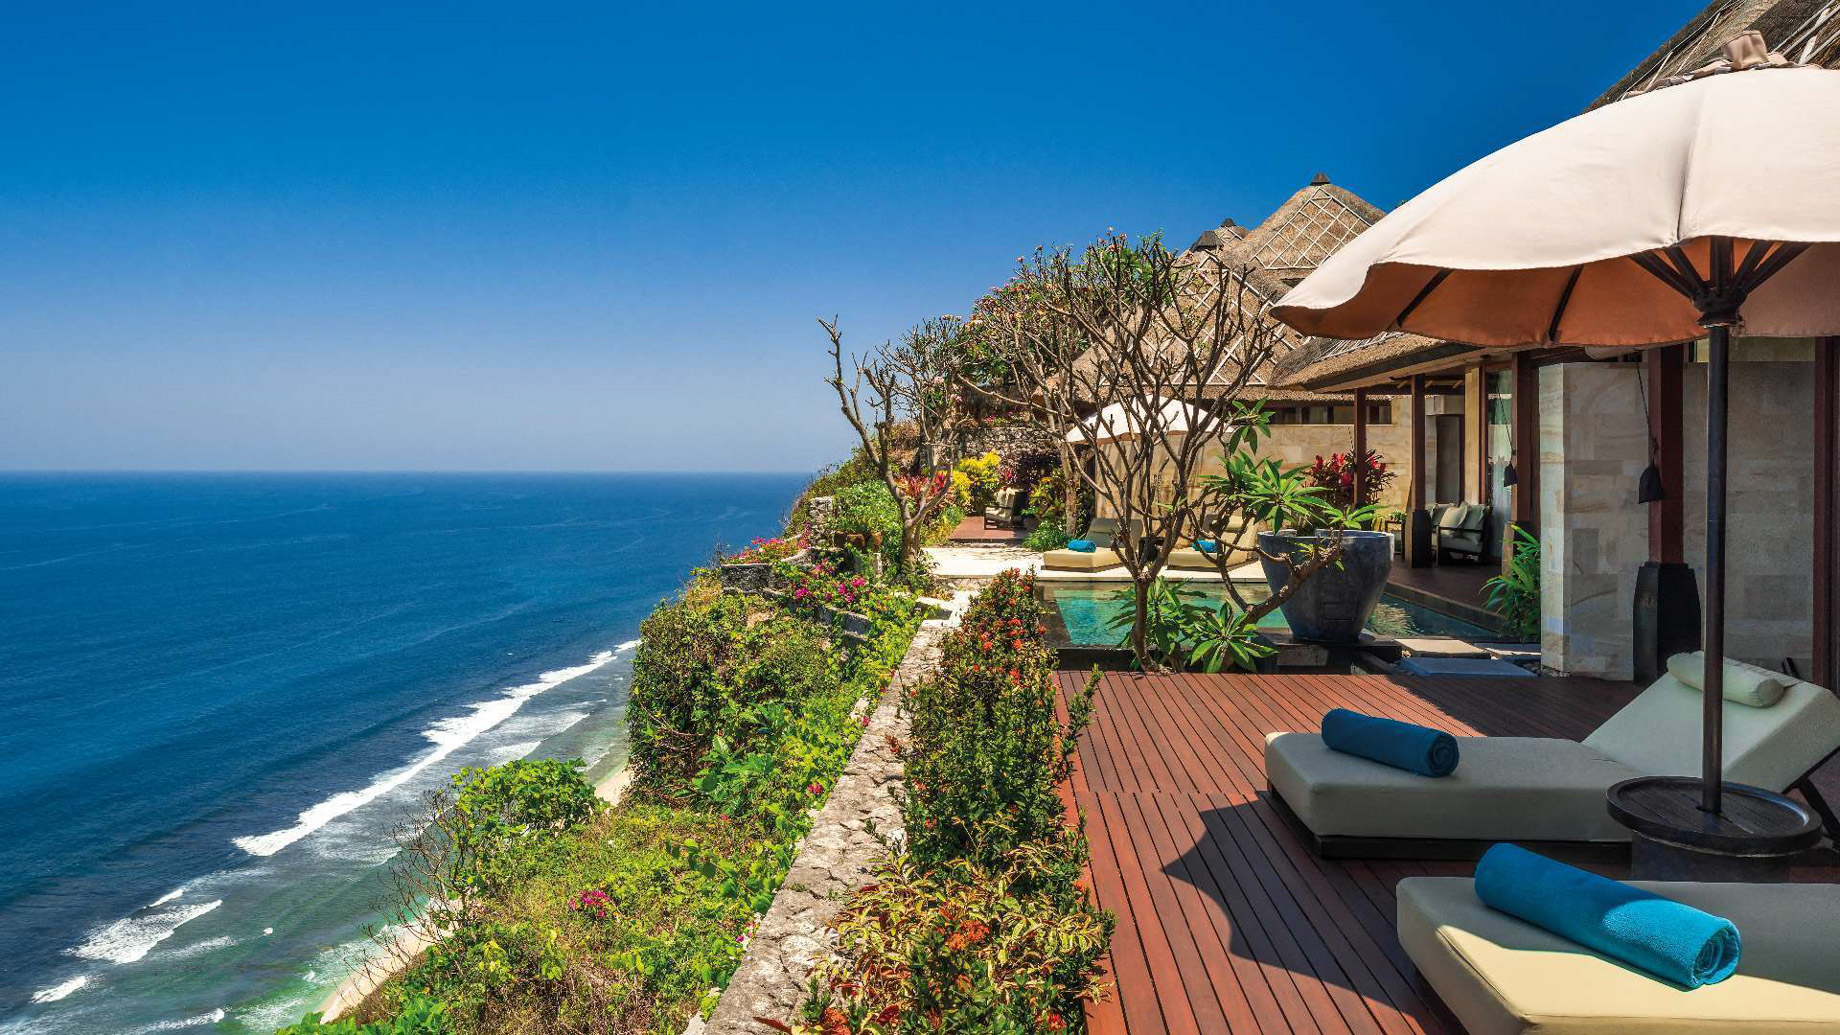 Bvlgari Resort Bali – Uluwatu, Bali, Indonesia – Ocean Cliff Villa Pool Deck View